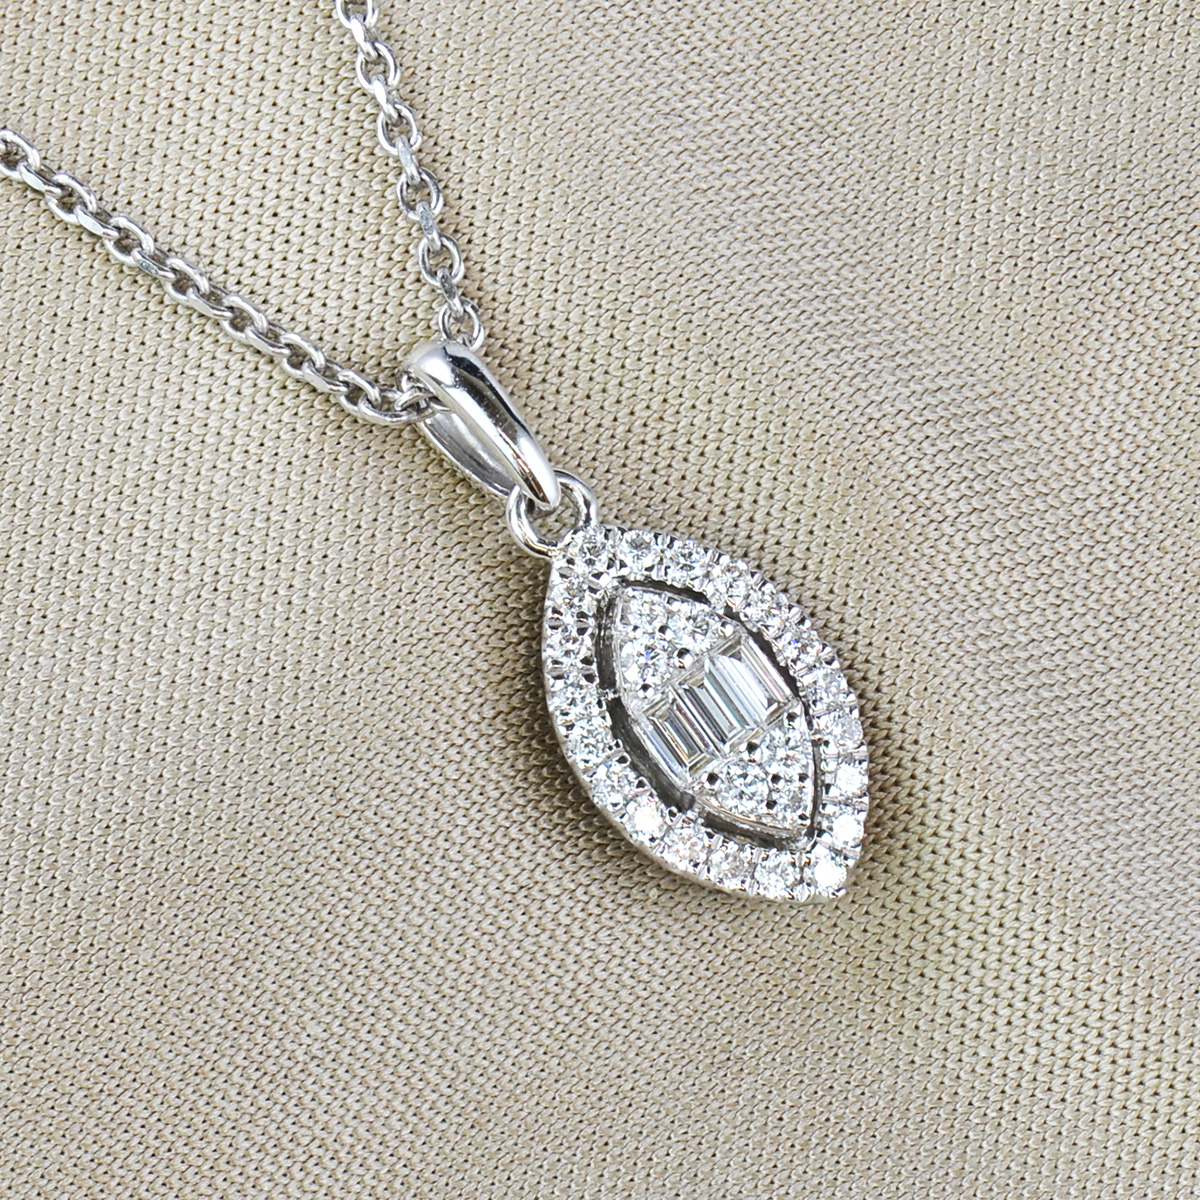 Marquise shaped diamond cluster pendant